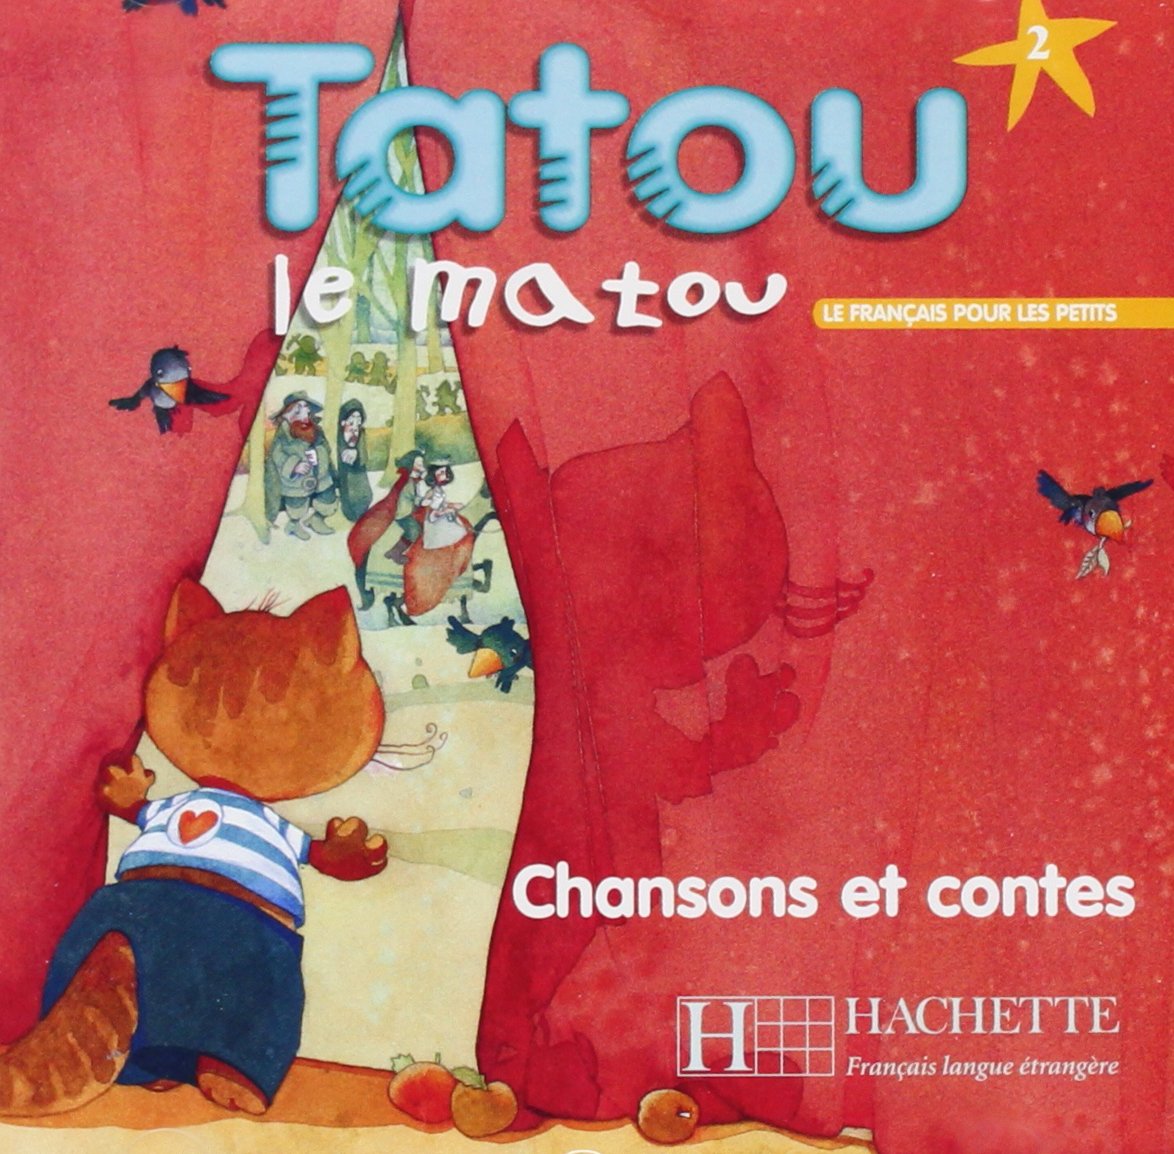 Tatou le matou 2 CD audio Chansons et contes / Аудиодиск с песнями и стихами